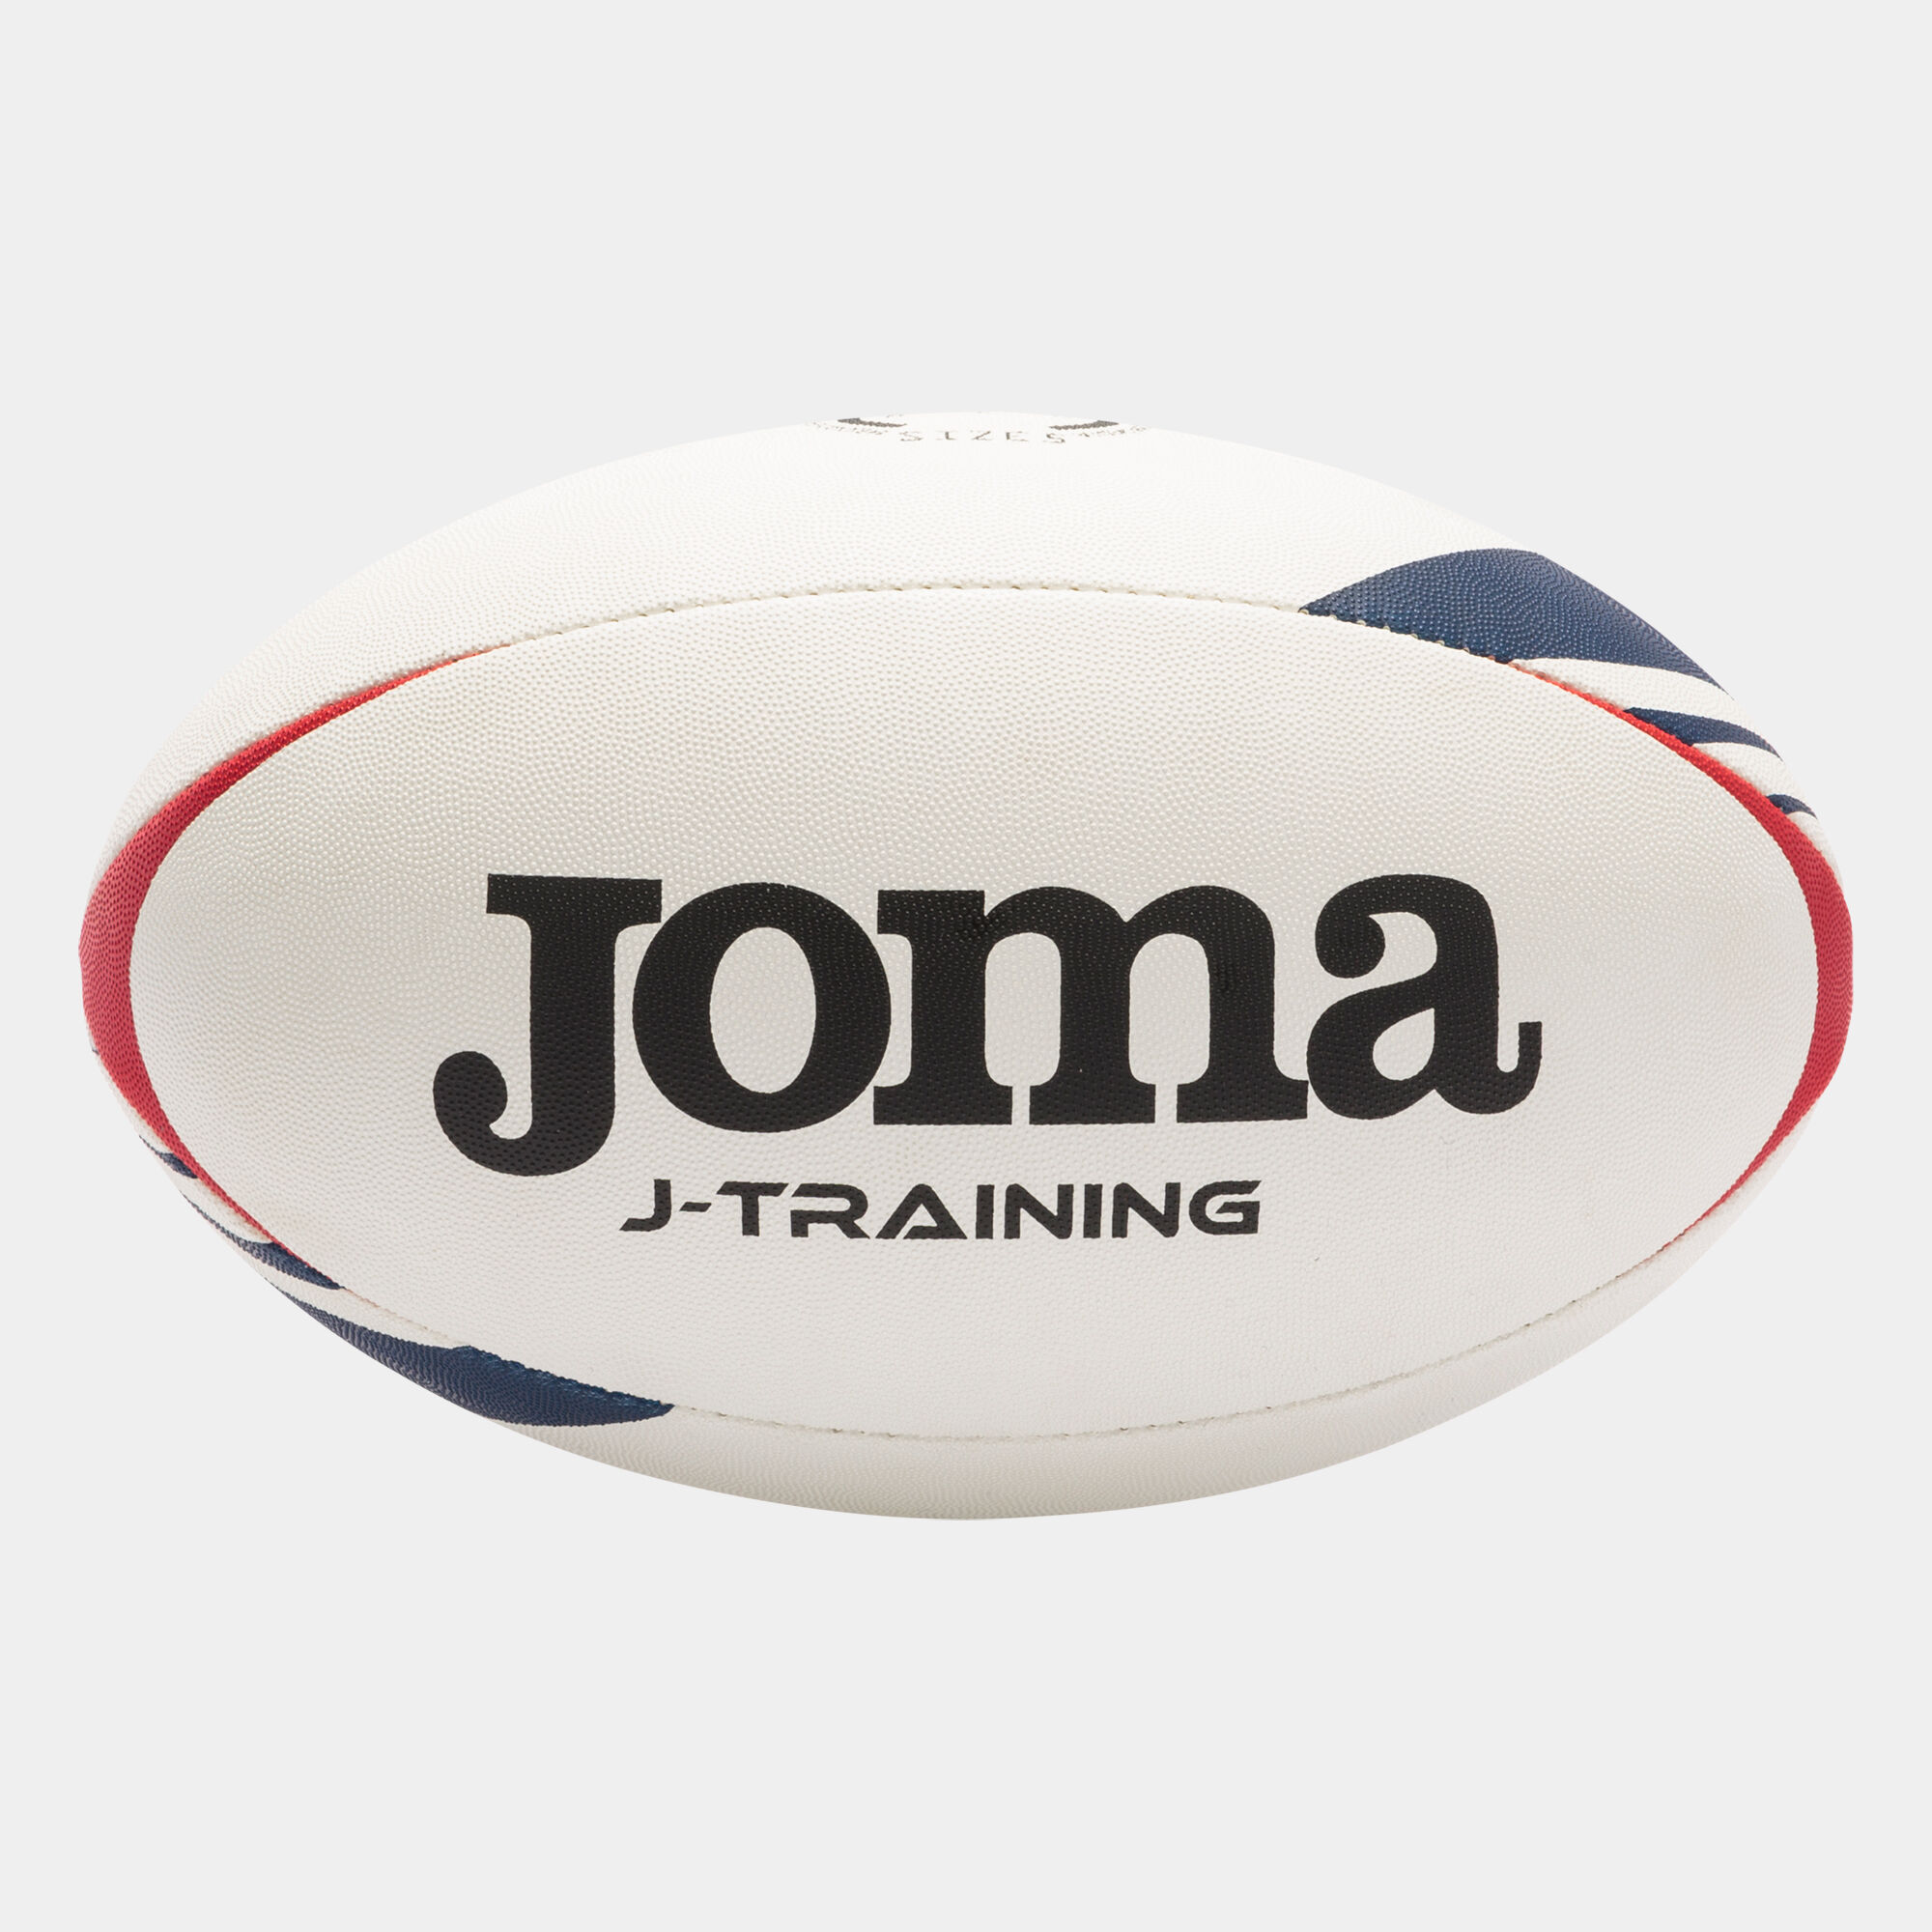 Ballon rugby J-Training blanc rouge bleu marine